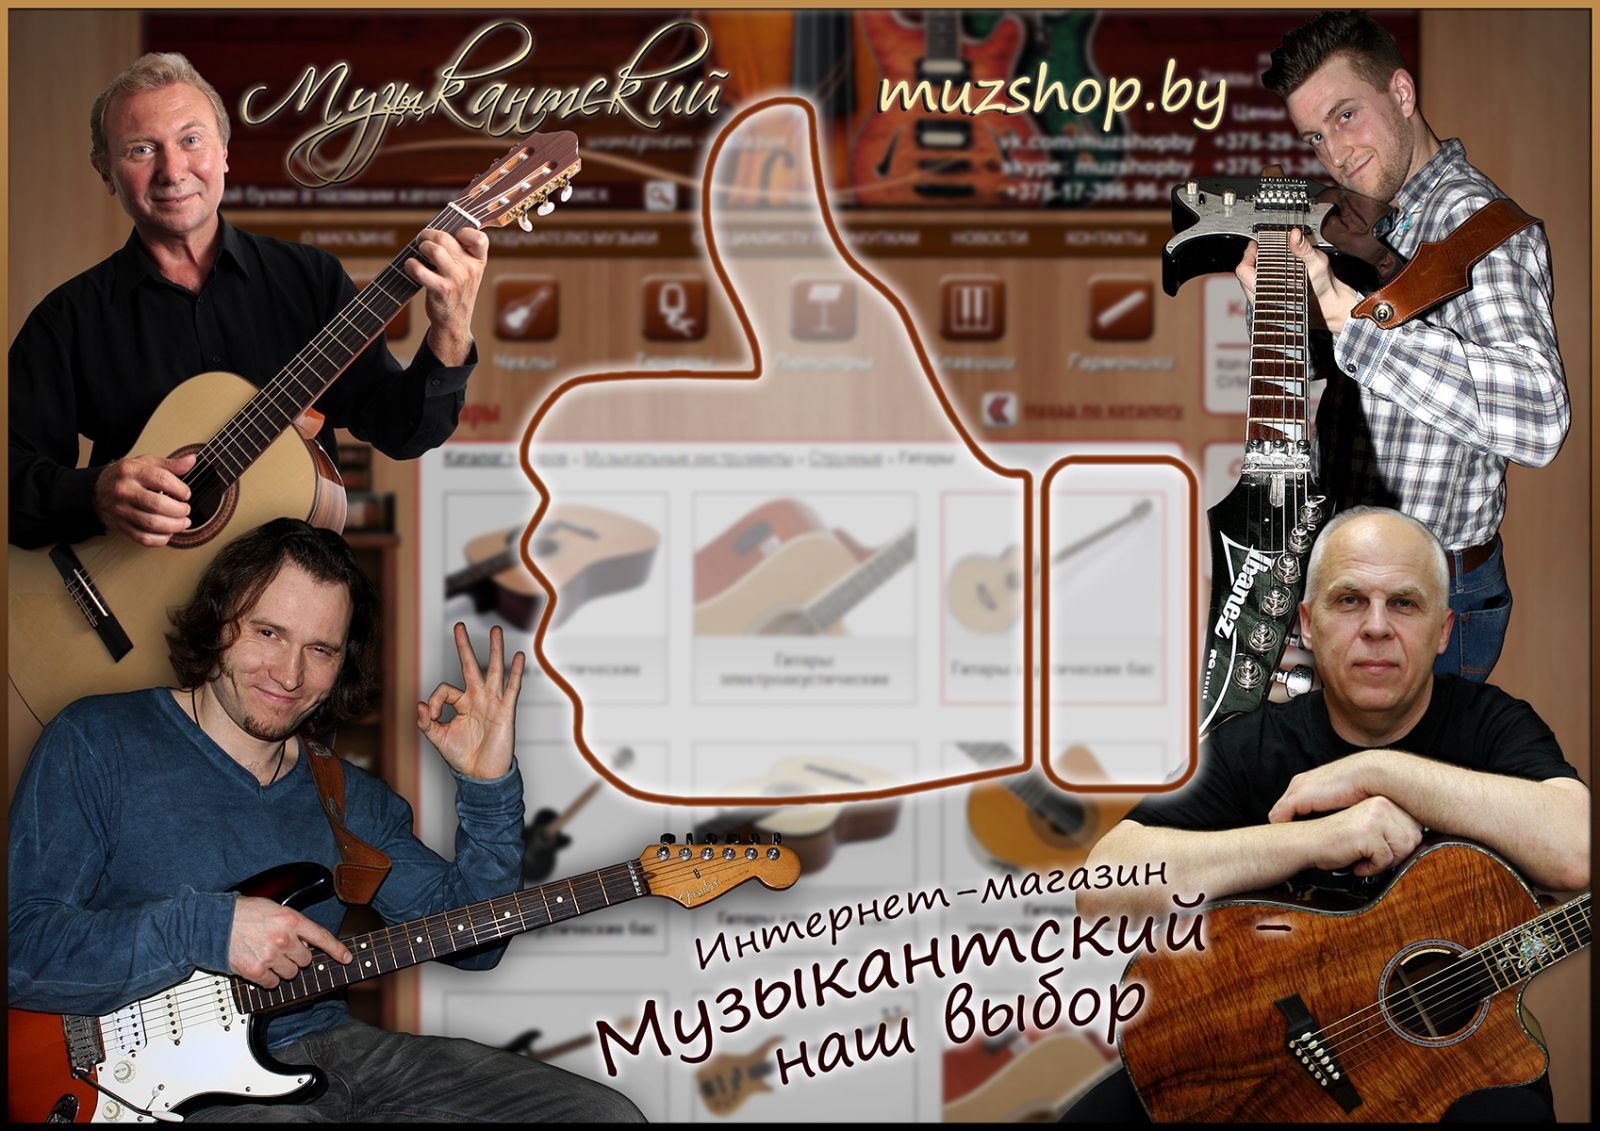 Олег Копенков на плакате Музыкантского